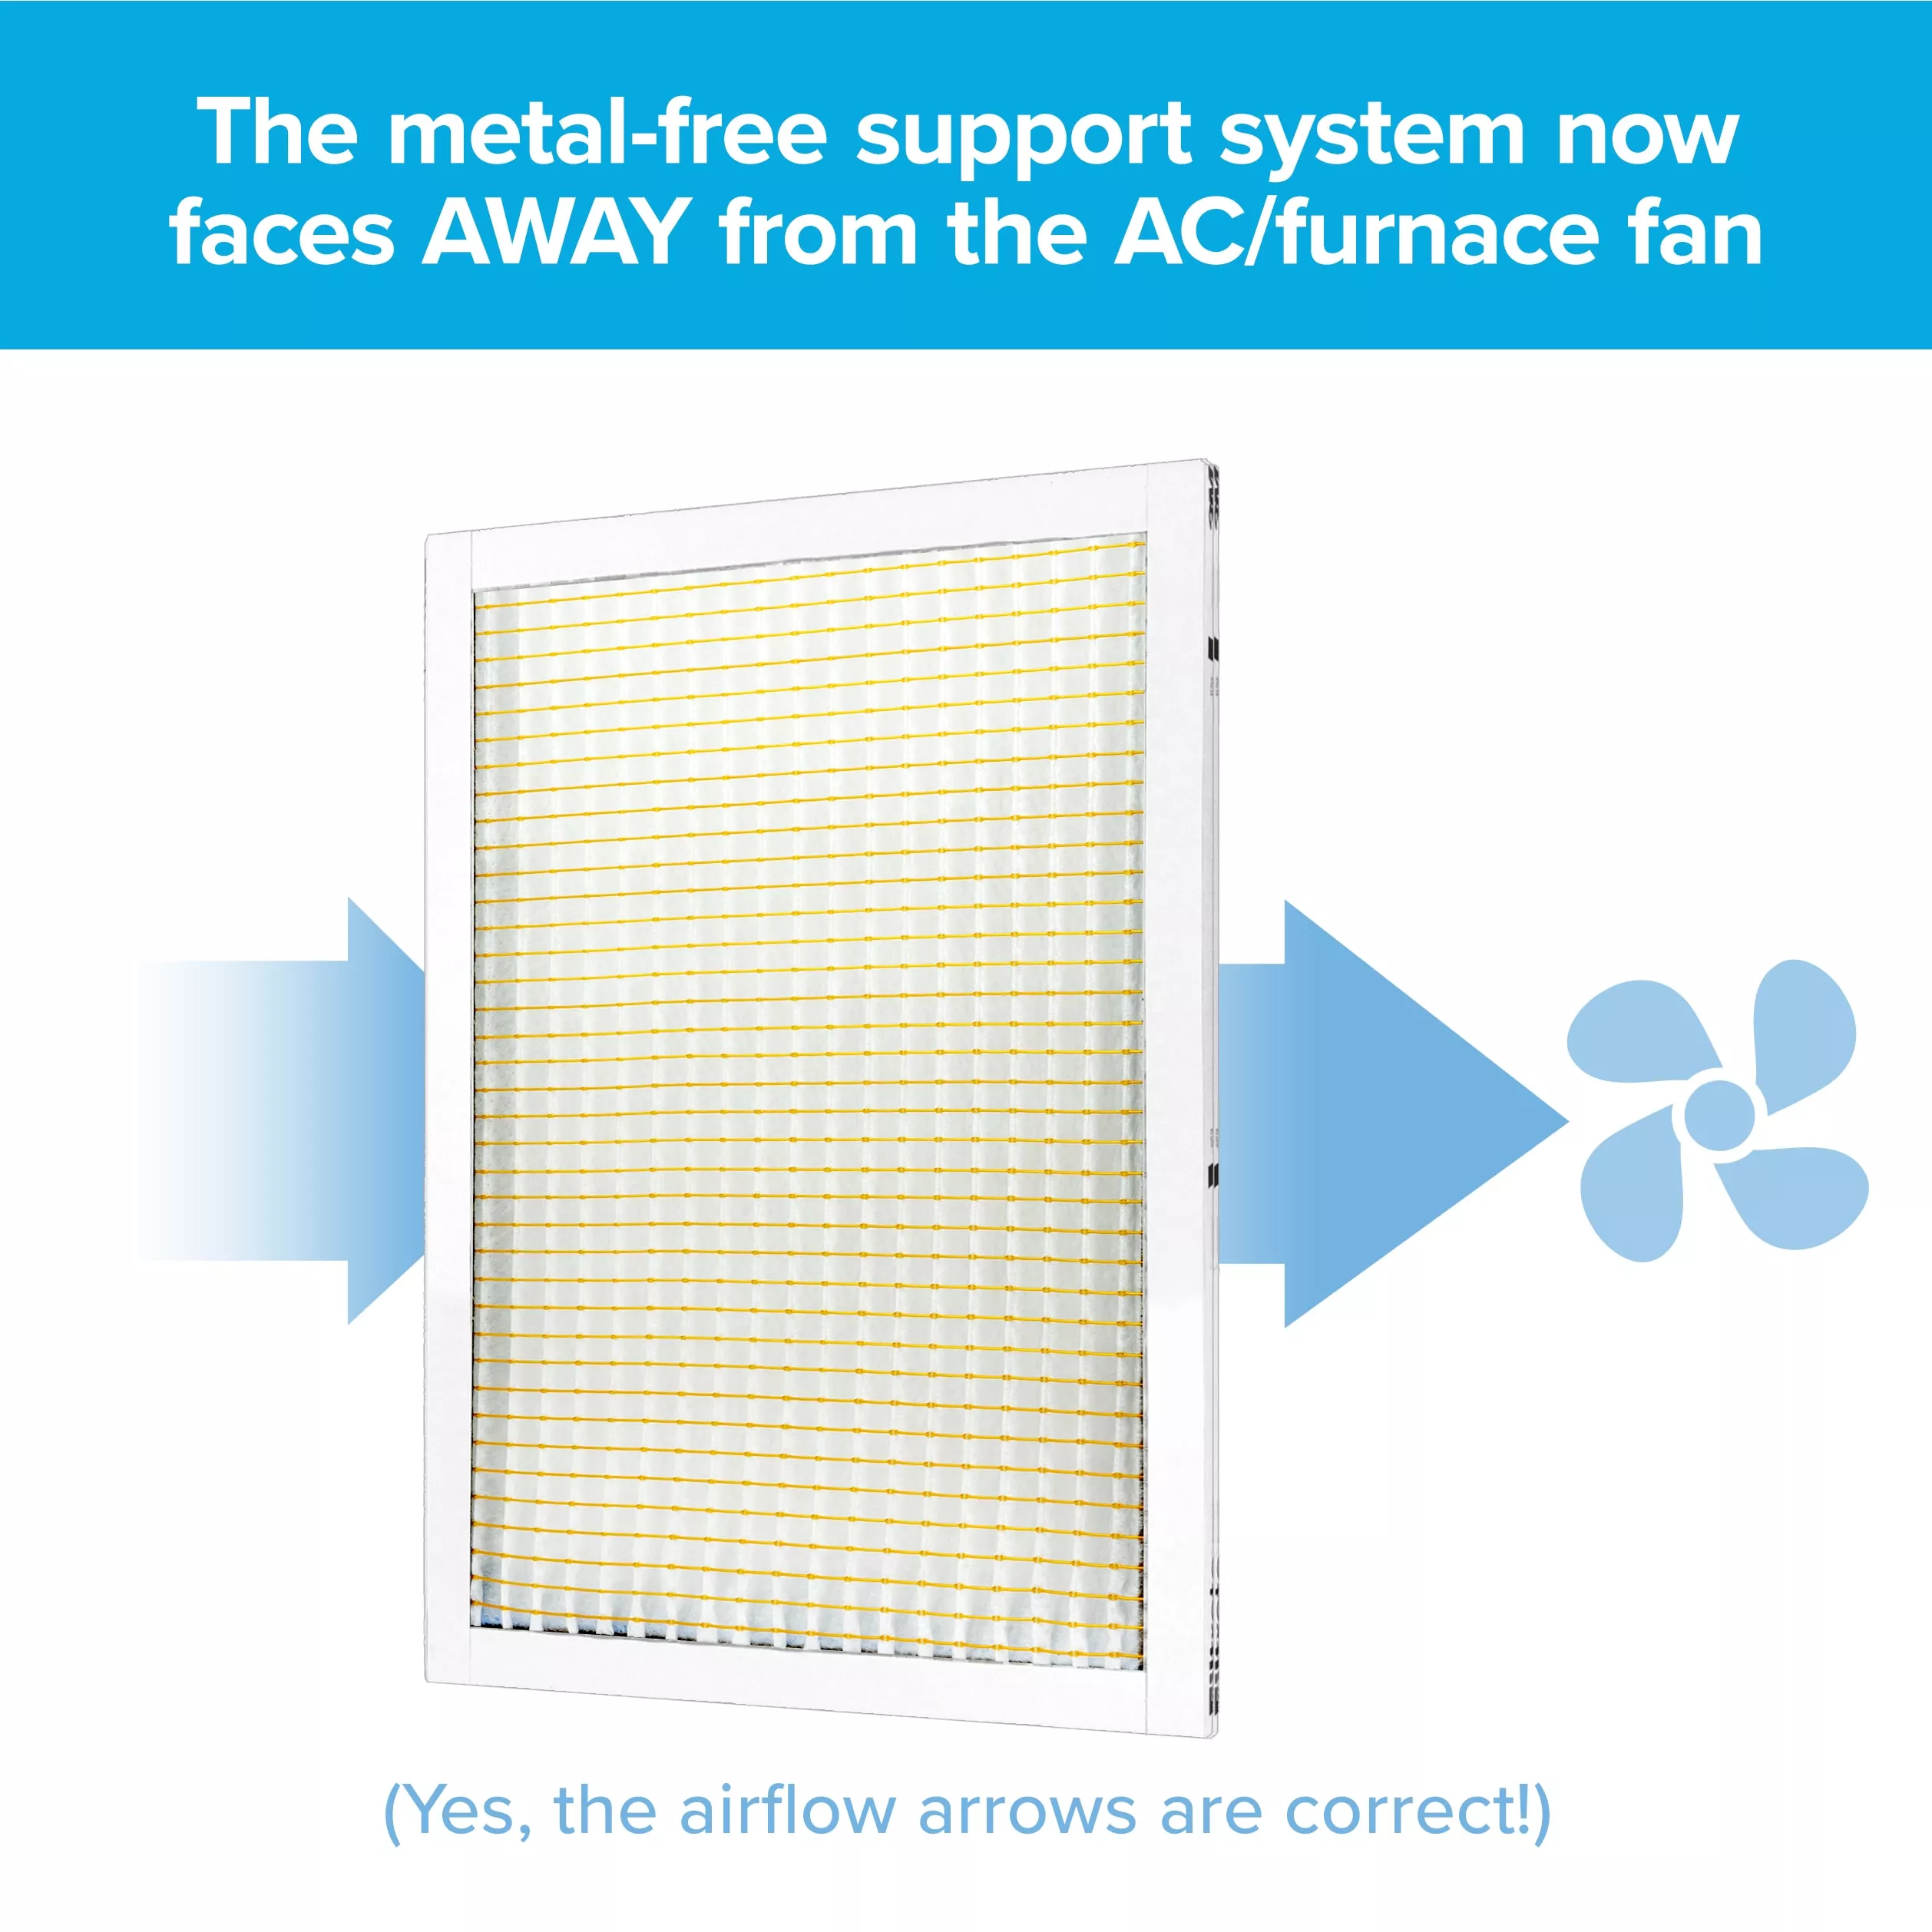 SKU 7100184246 | Filtrete™ Basic Dust & Lint Air Filter